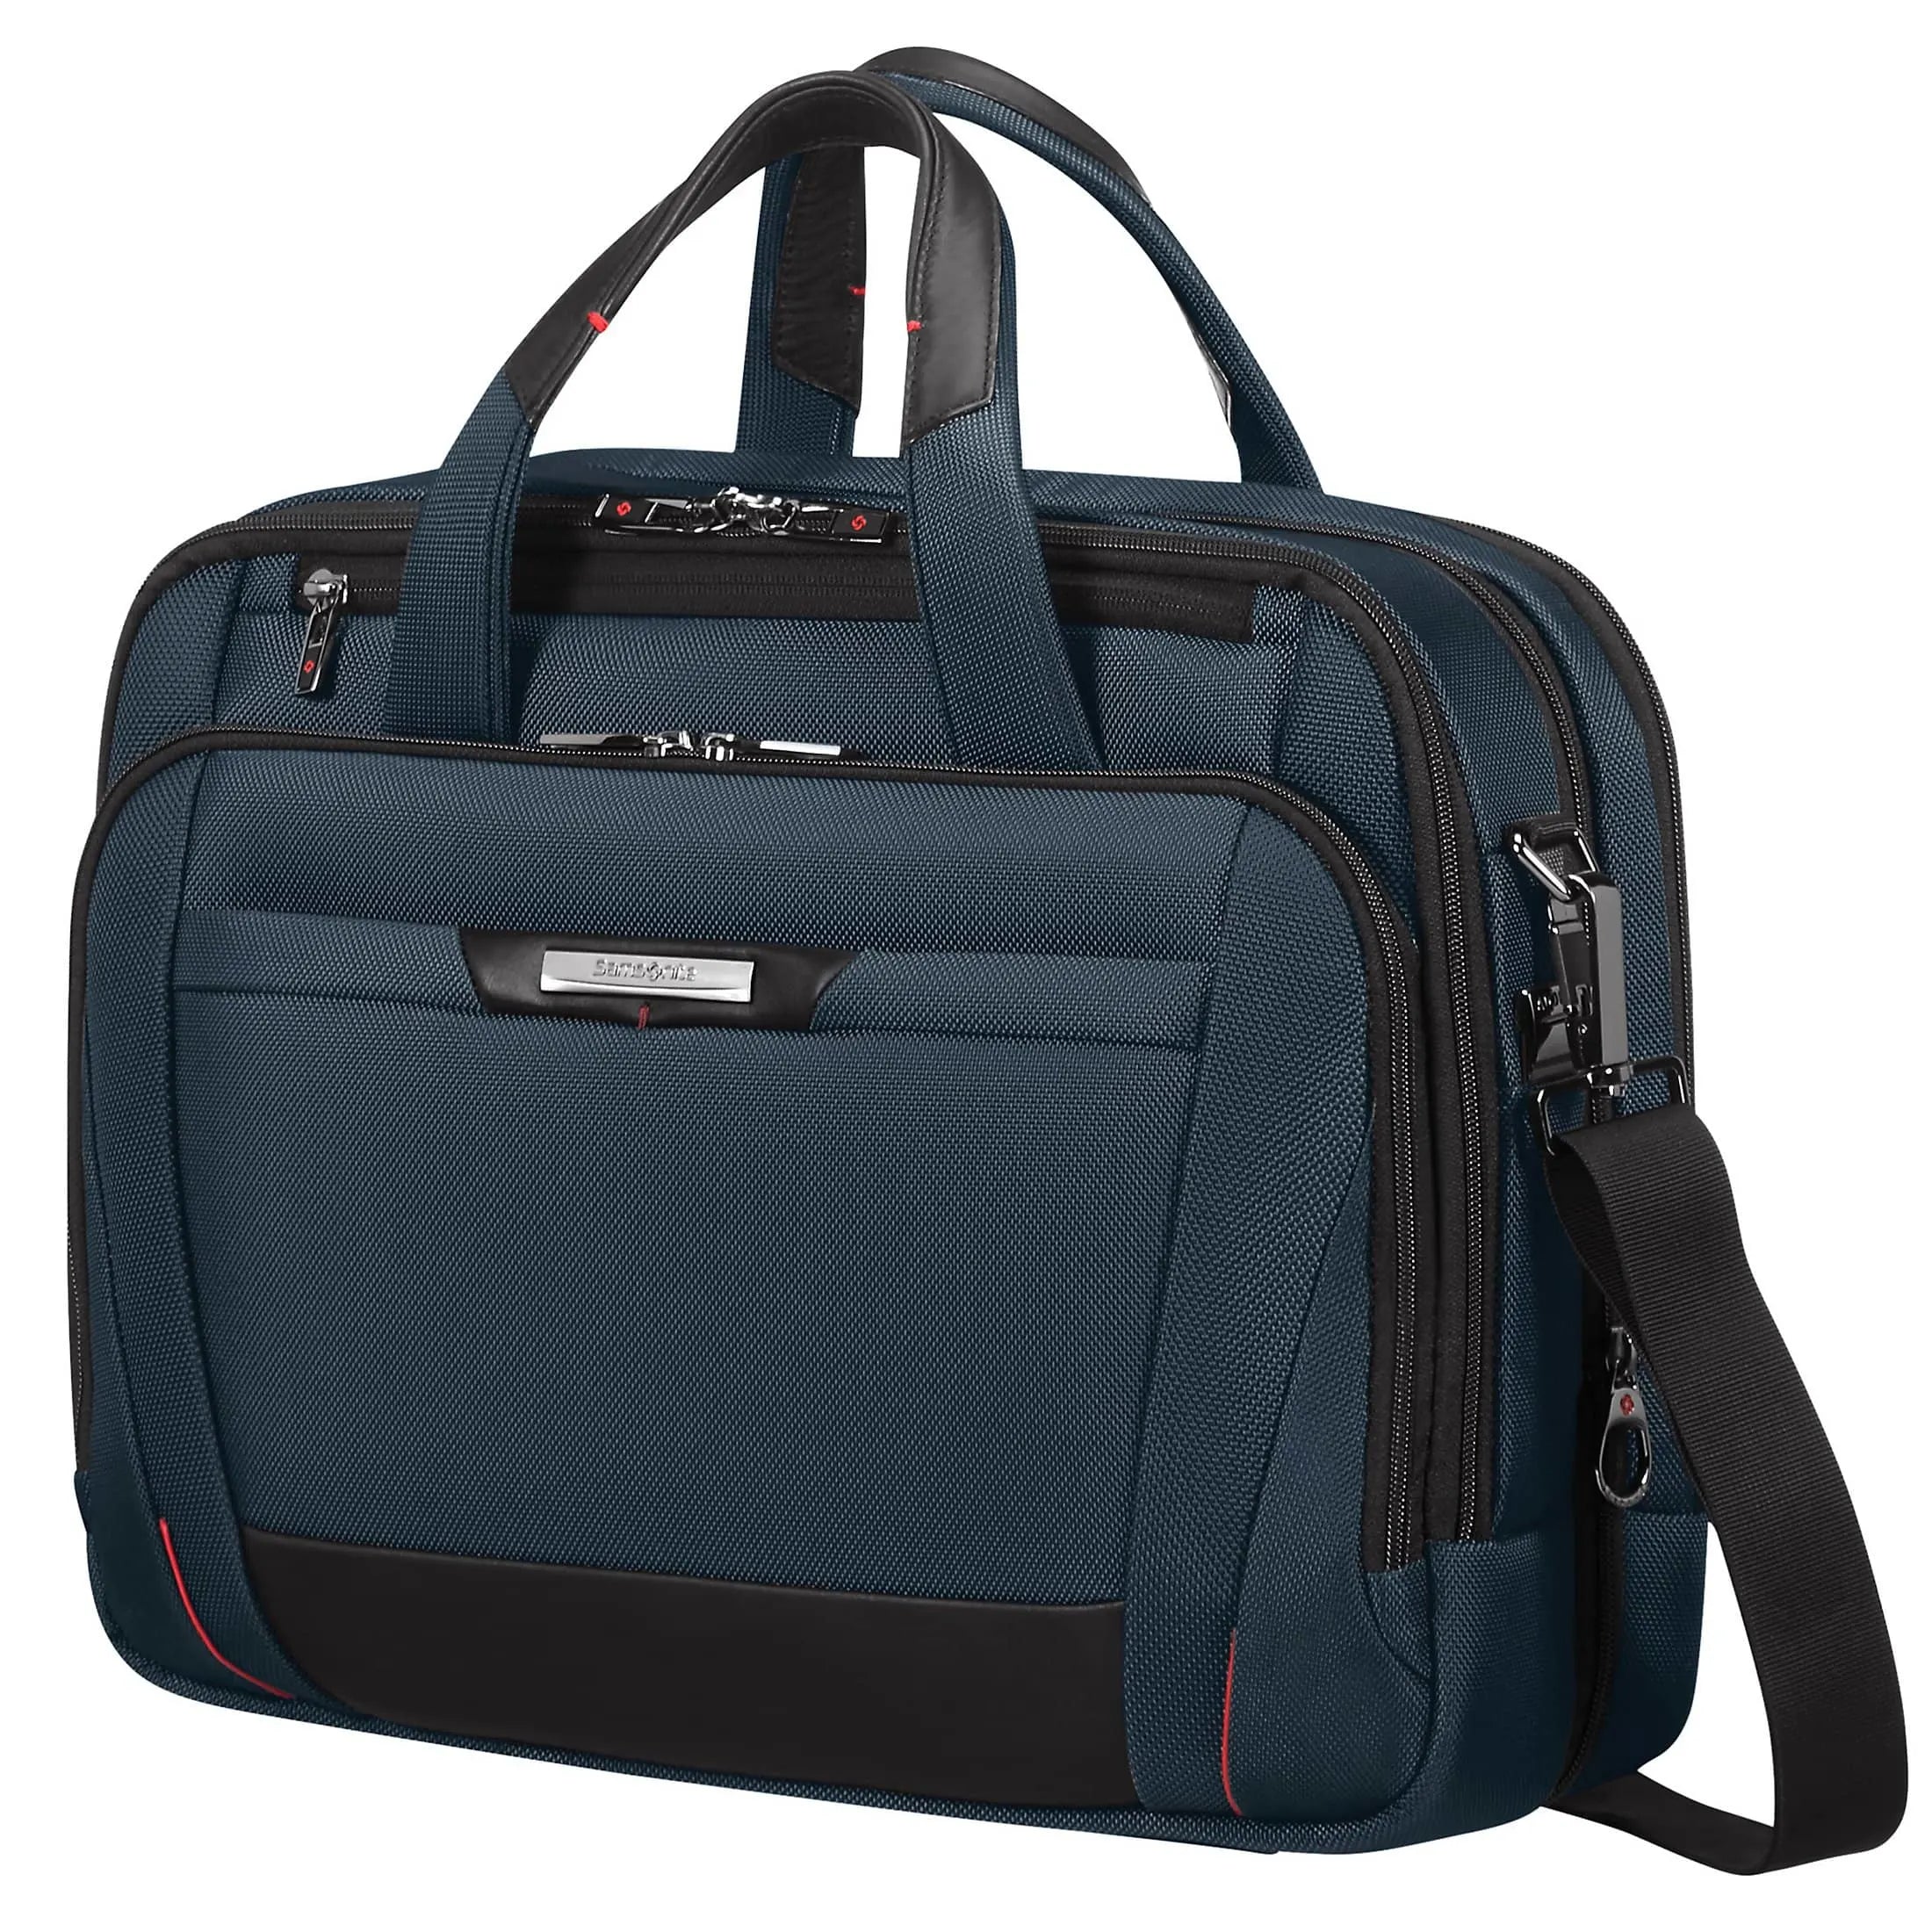 Samsonite Pro-DLX 5 Laptop Briefcase 42 cm - oxford blue